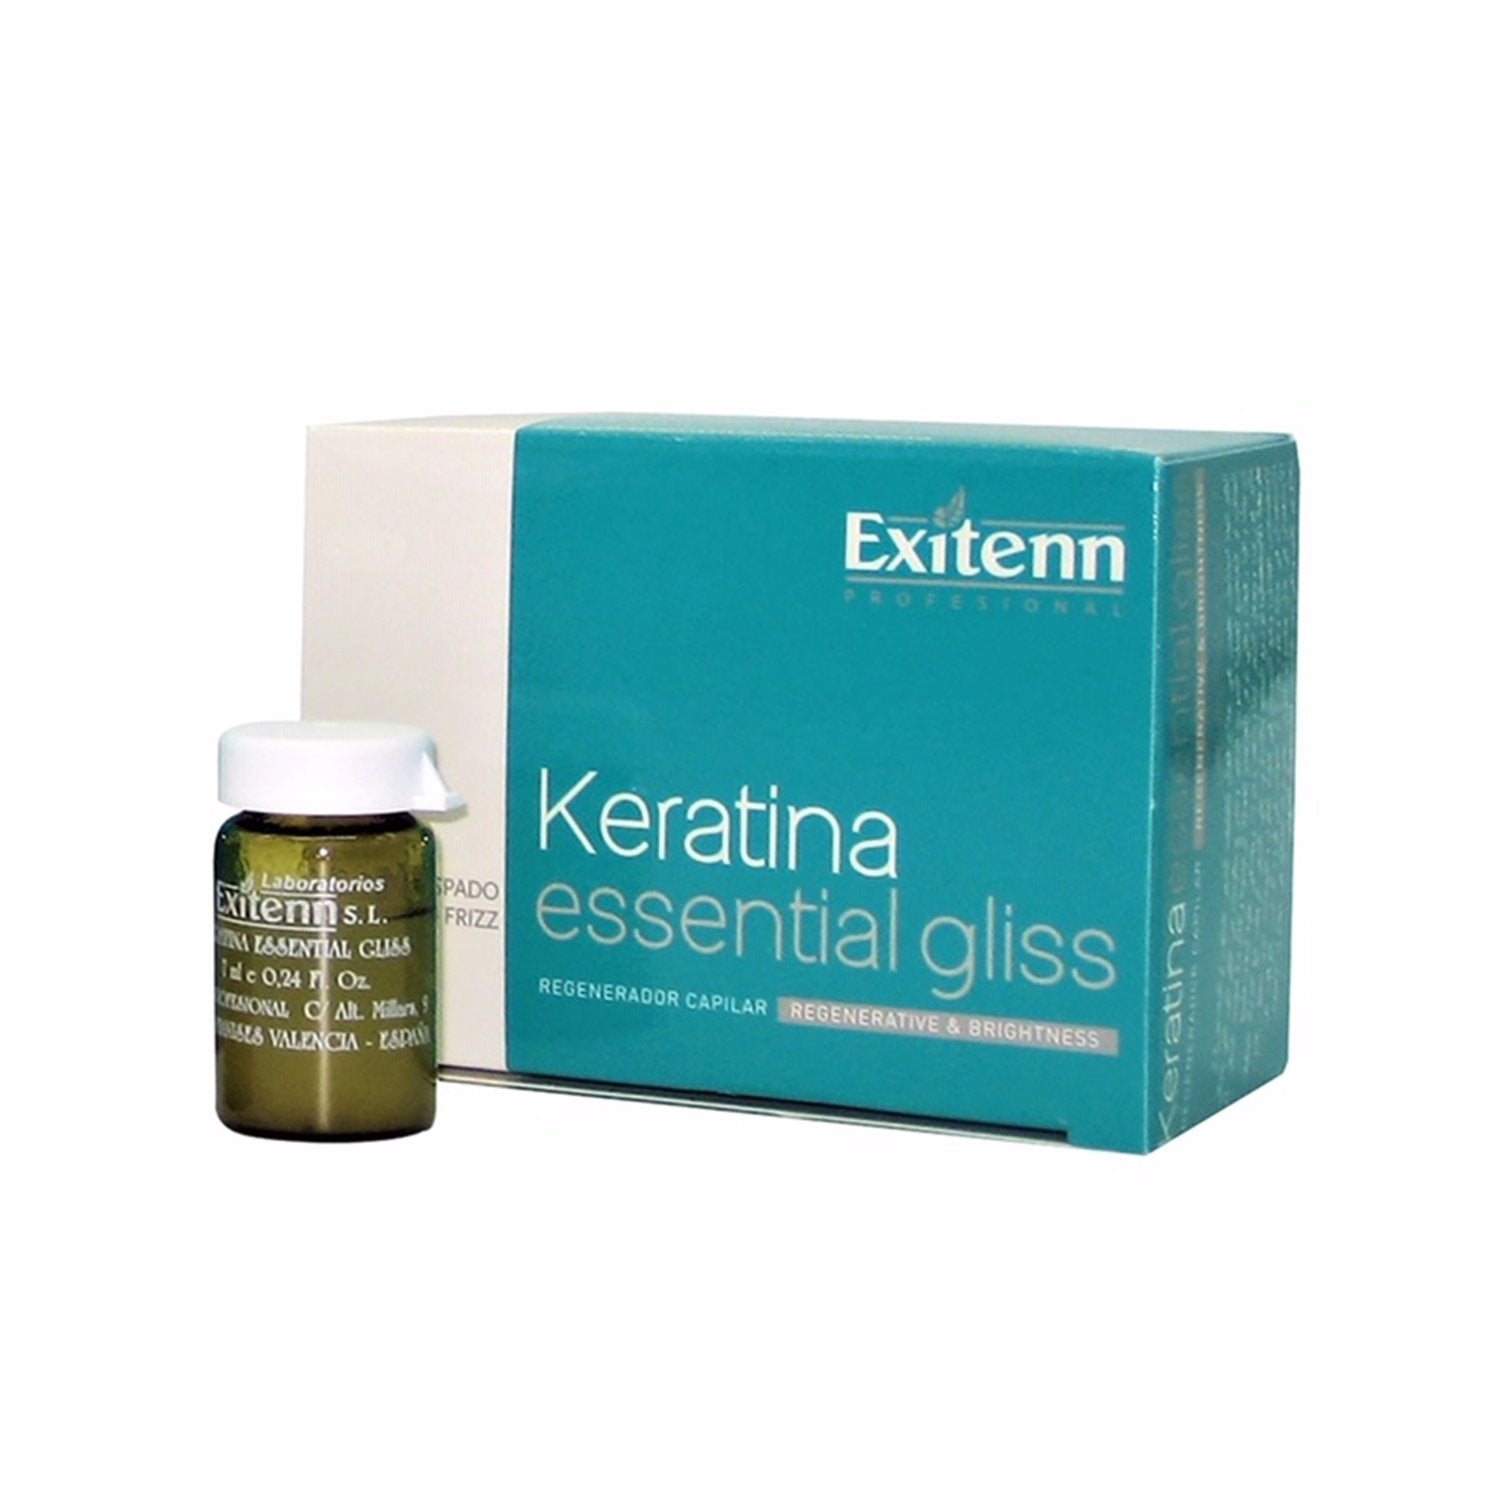 Exitenn essential gliss ampollas 12 viales x 7 ml. - todo tipo de cabello - Kosmetica